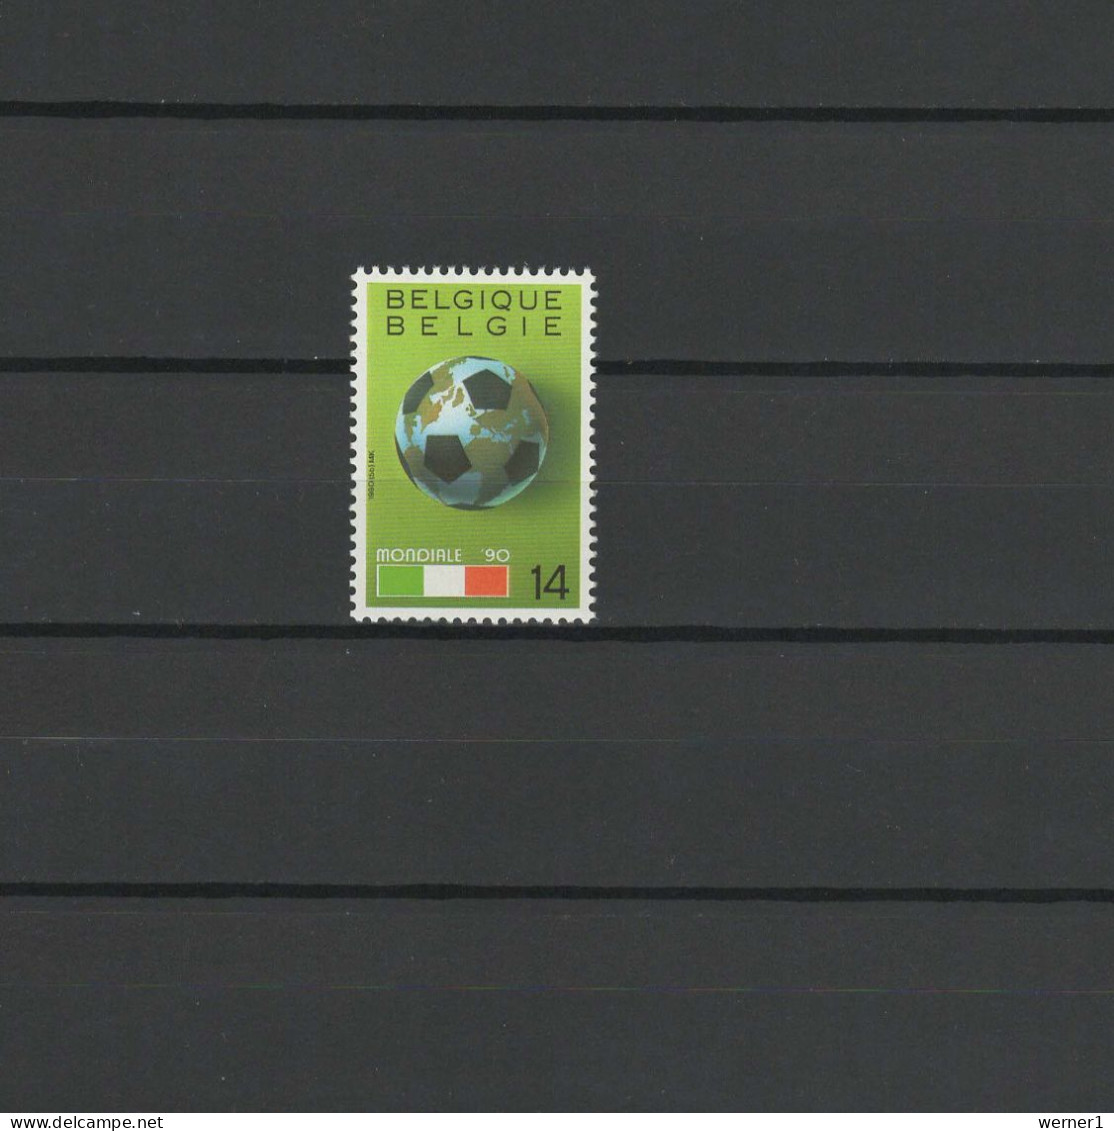 Belgium 1990 Football Soccer World Cup Stamp MNH - 1990 – Italien